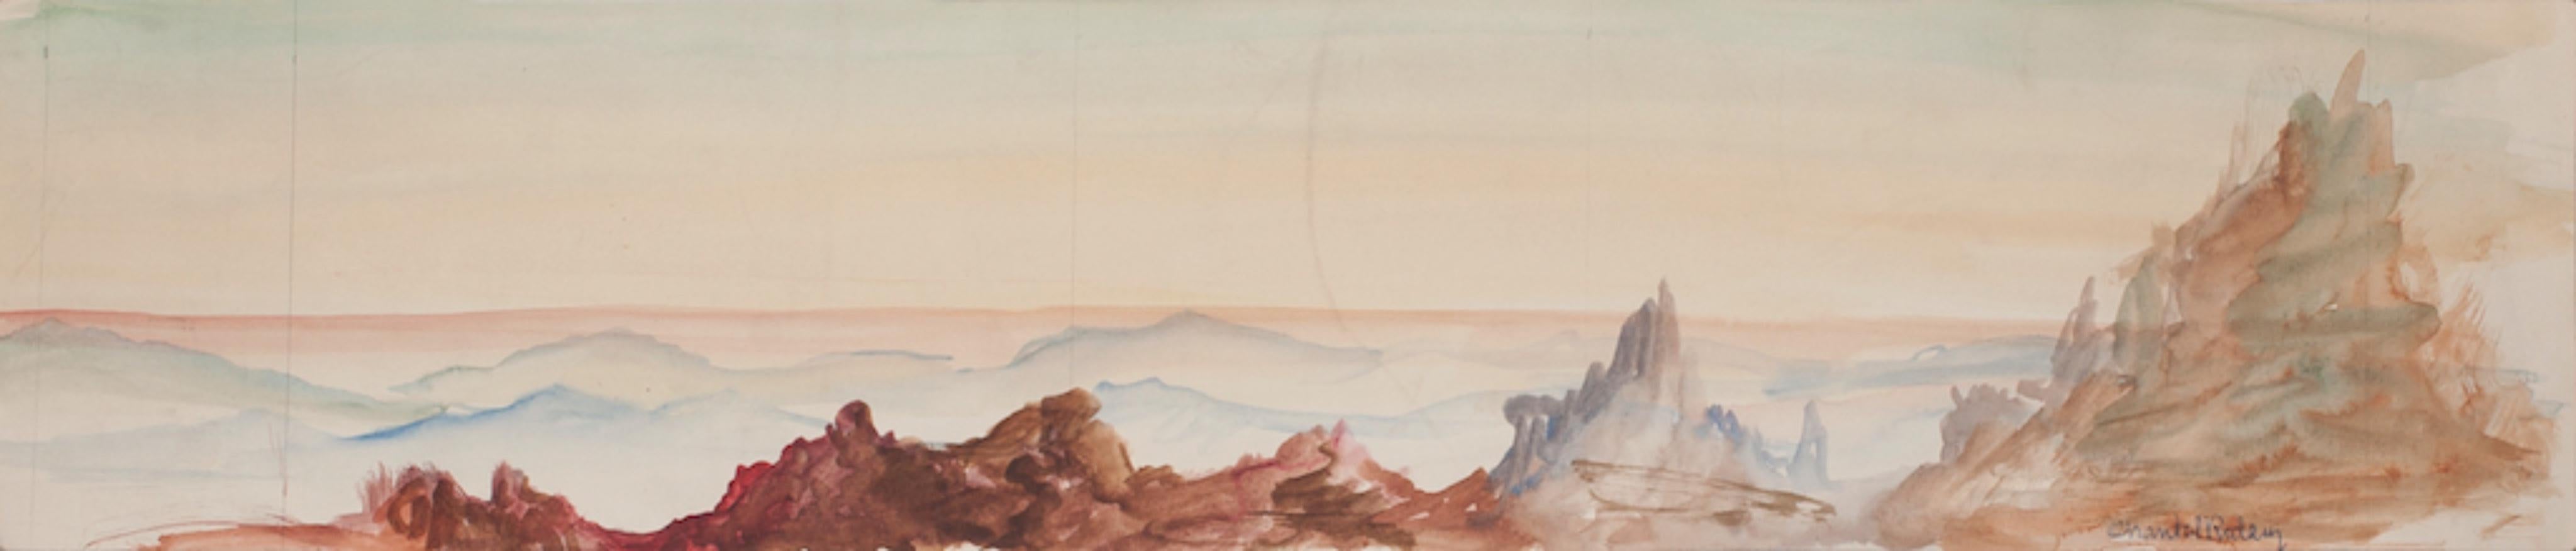 Unknown Landscape Art - Landscape - Original Watercolor signed "Chantau Reclan" - Early 20th Century